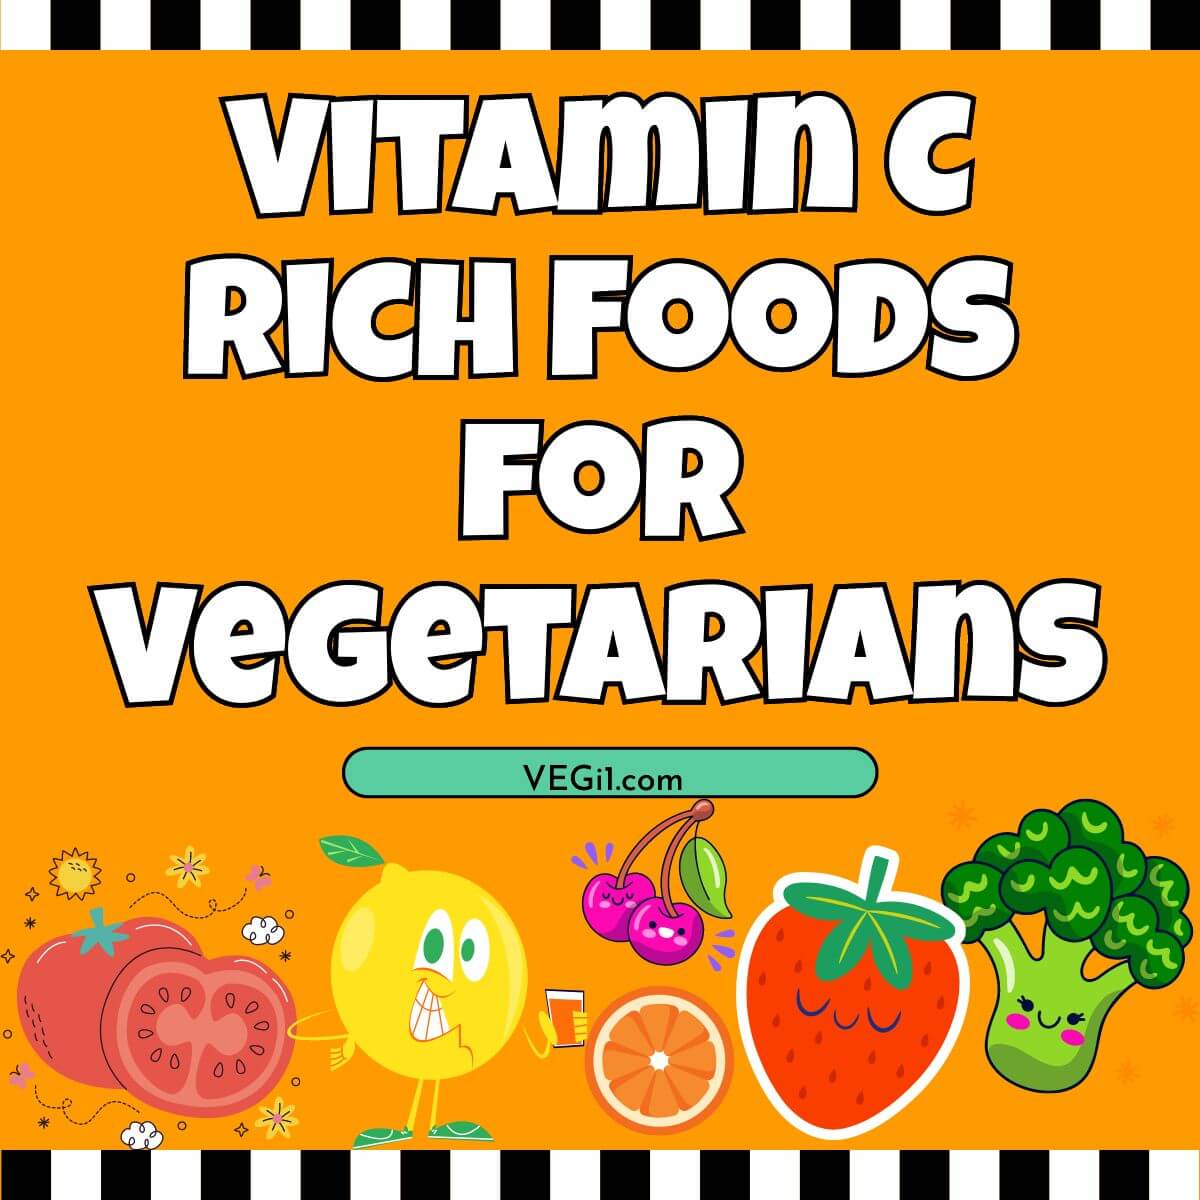 Vitamin C Rich Foods for Vegetarians